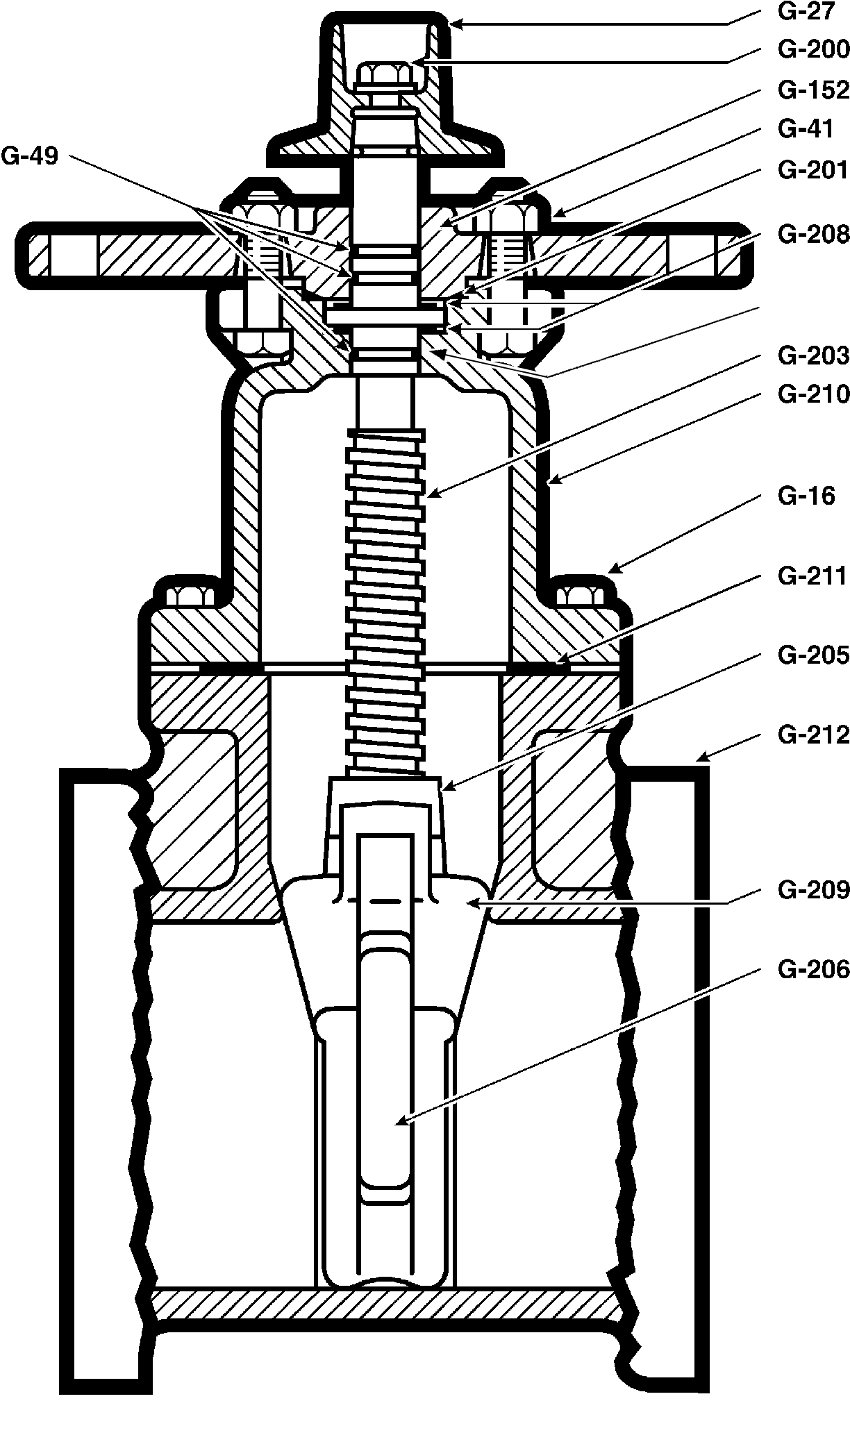 P-USP1-20 MJxMJ 14-24in Parts Drawing